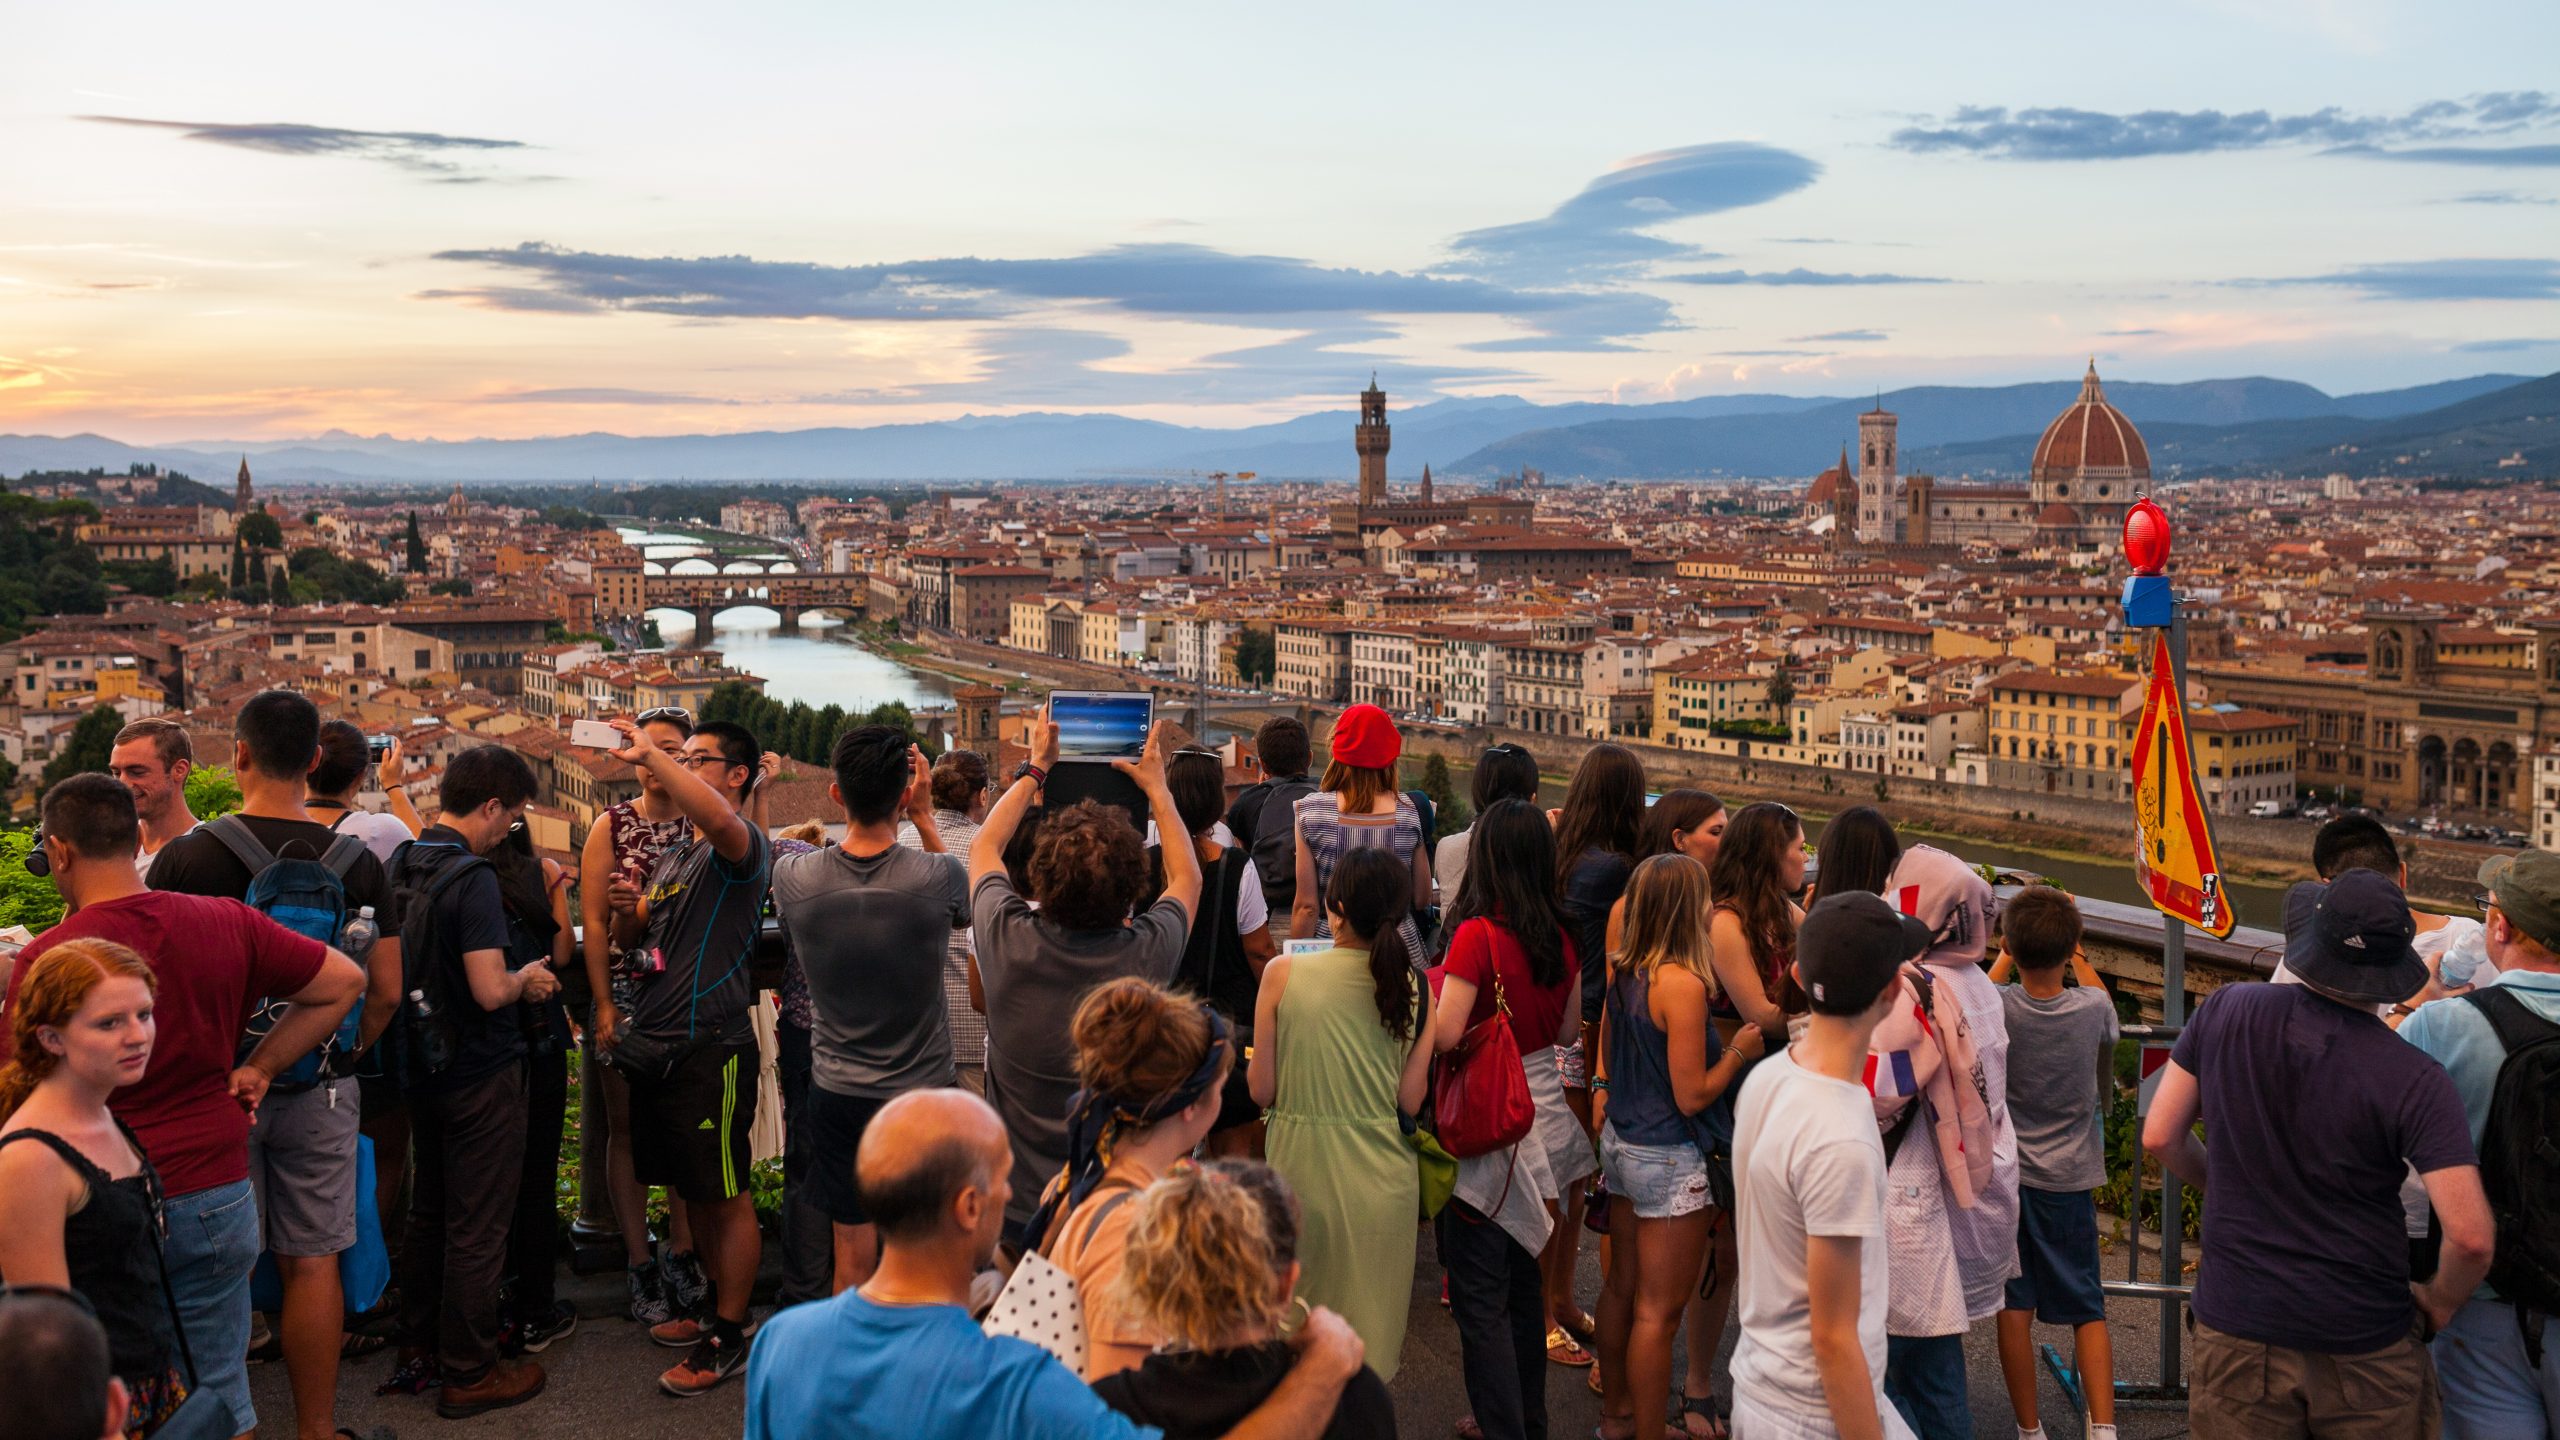 tłum, turyści, overtourism, fot. sashk0, Shutterstock